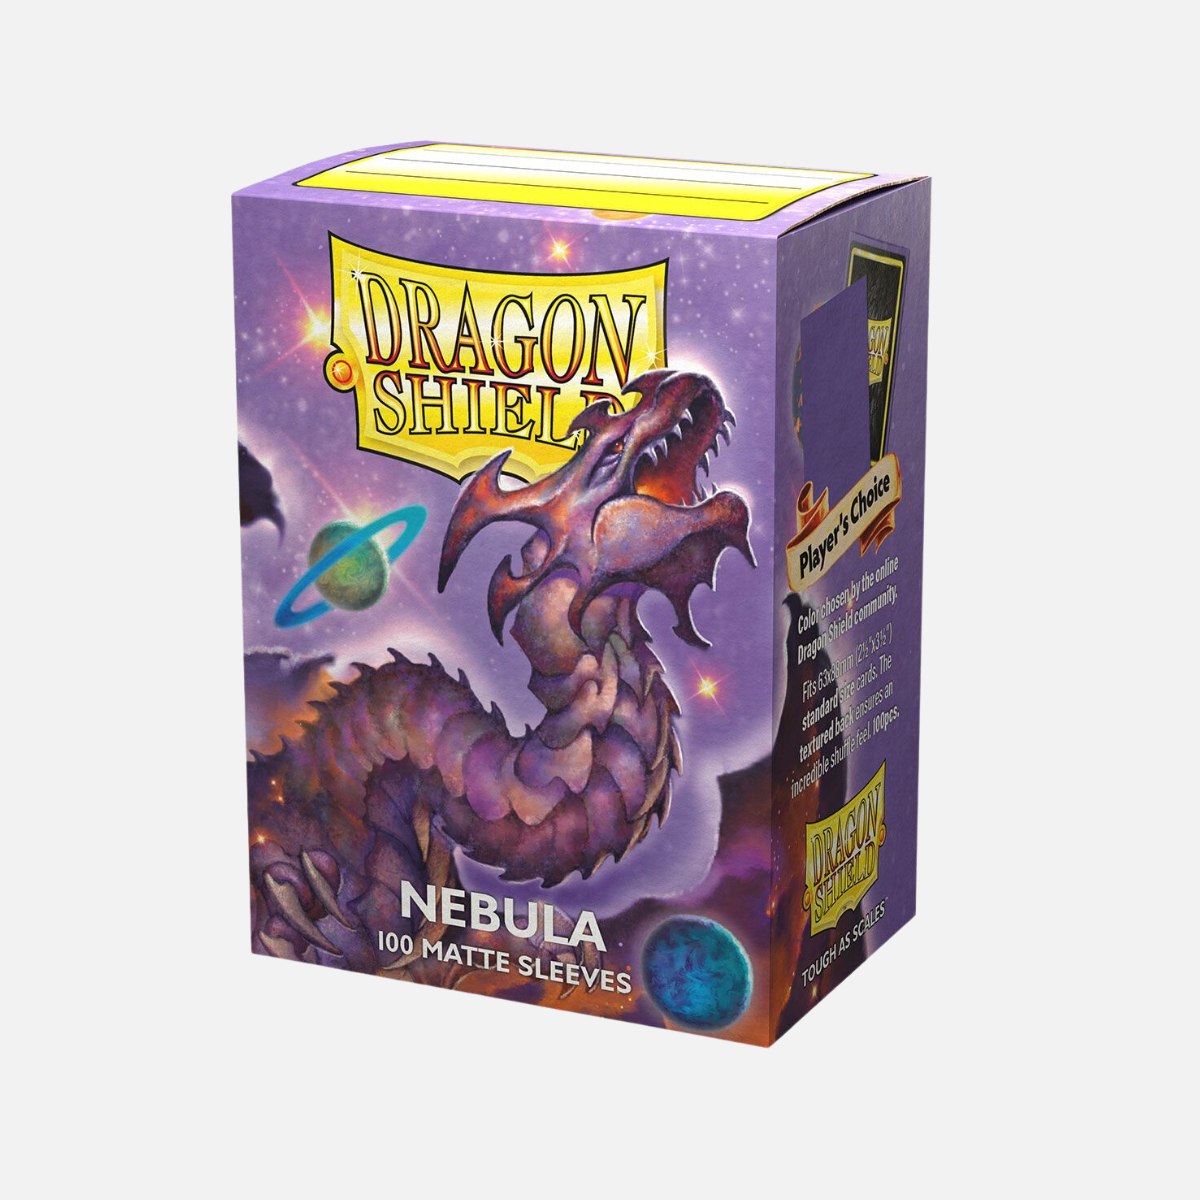 Dragon Shield card sleeves box of 100 nebula matte